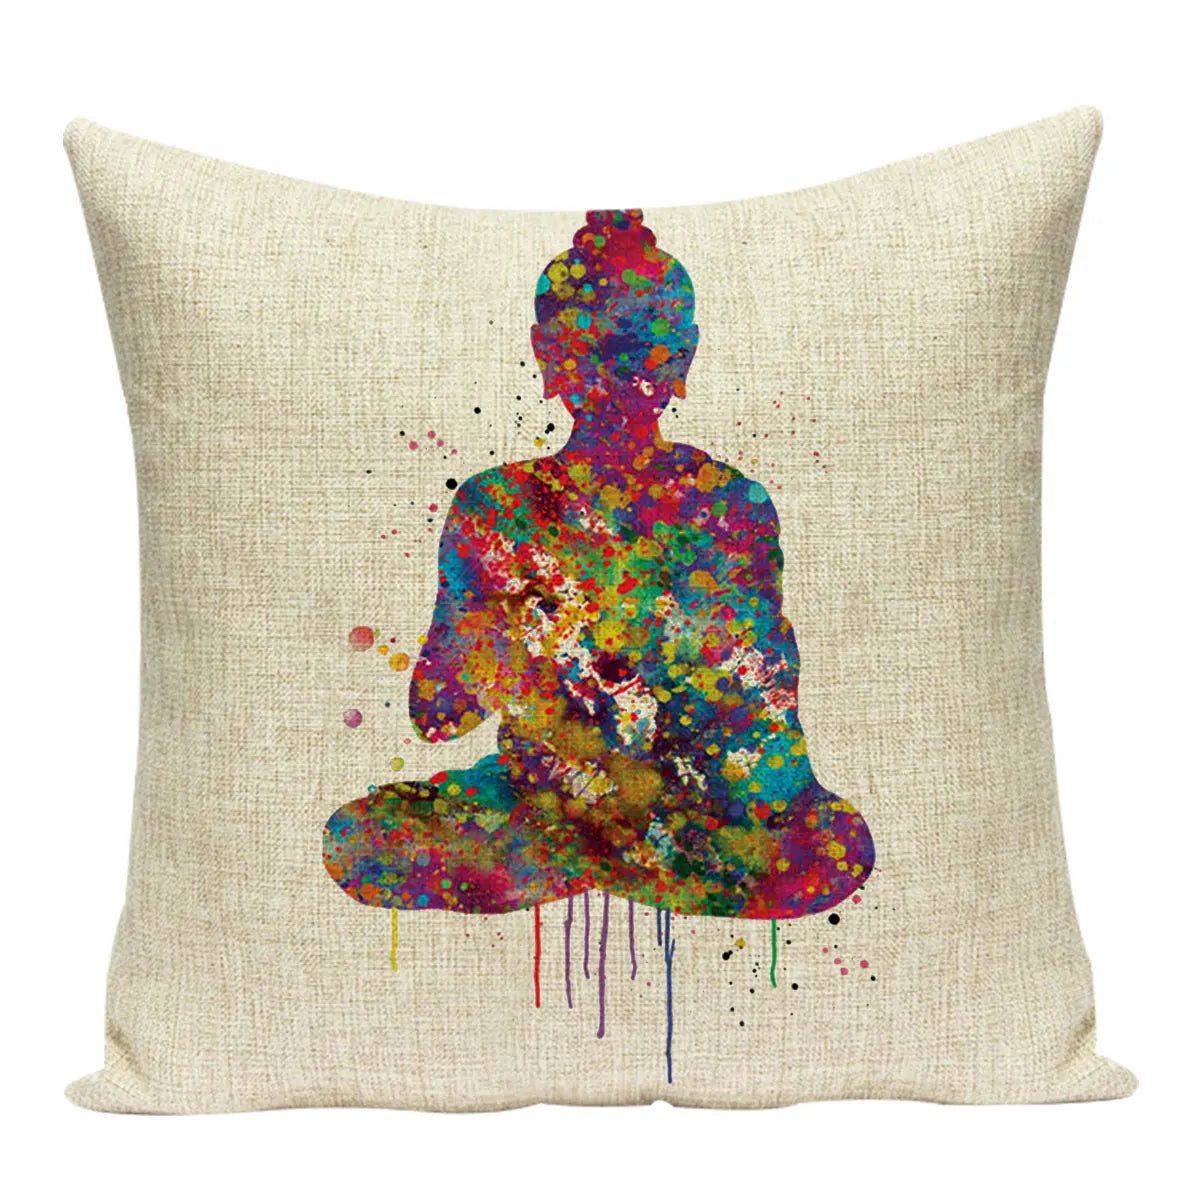 Creative Southeast Zen Digital Printed Pillowcase Folk Style Watercolor Cushions Decorative Pillow Home Decor Sofa Throw Pillows